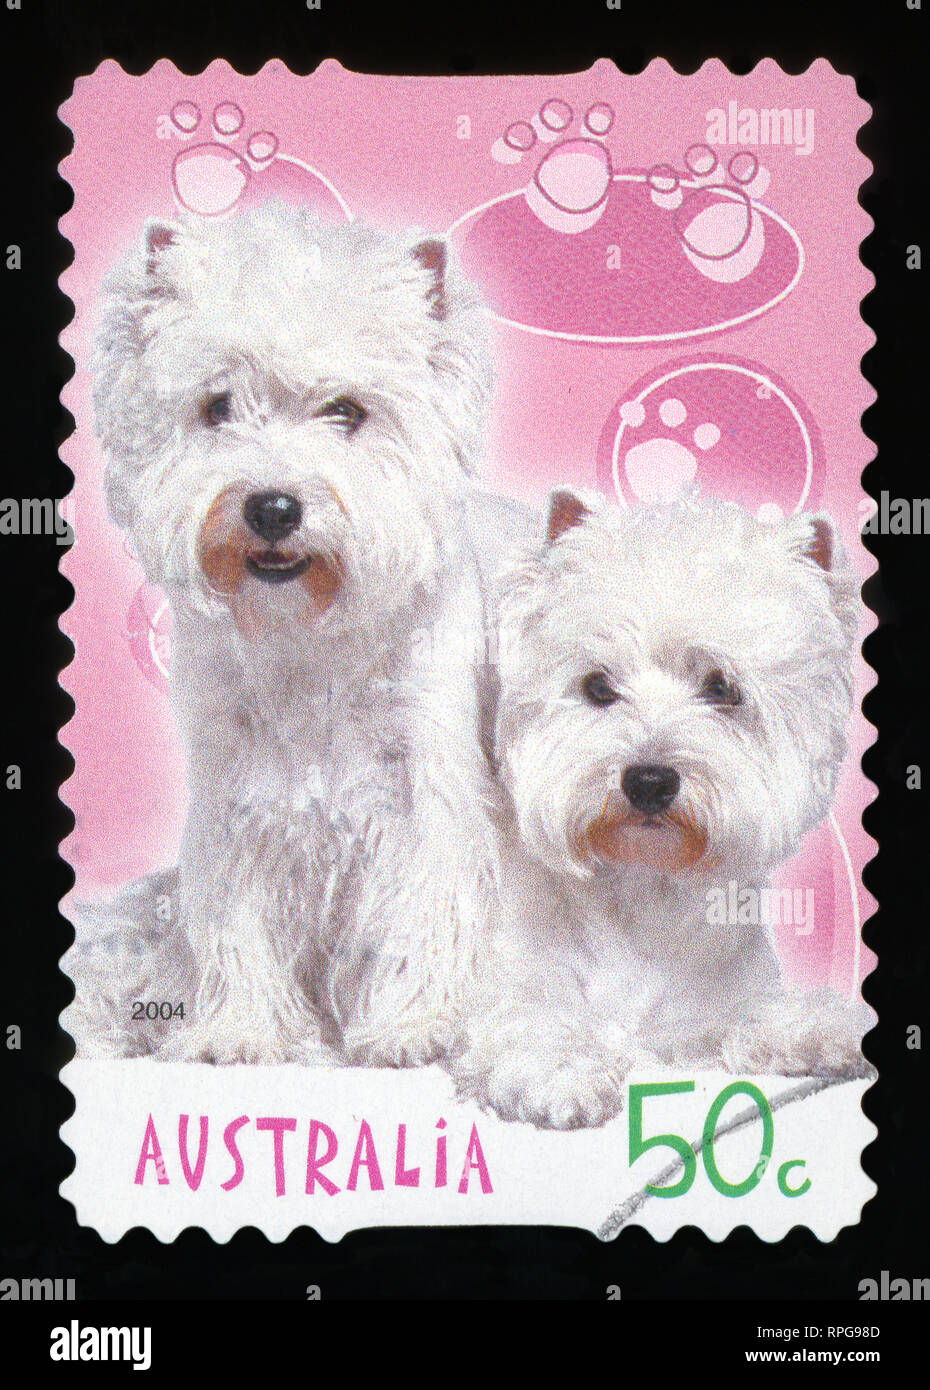 AUSTRALIA - CIRCA 2004: A stamp printed in Australia shows image of two Bichon Frise dogs, series, circa 2004. Stock Photo